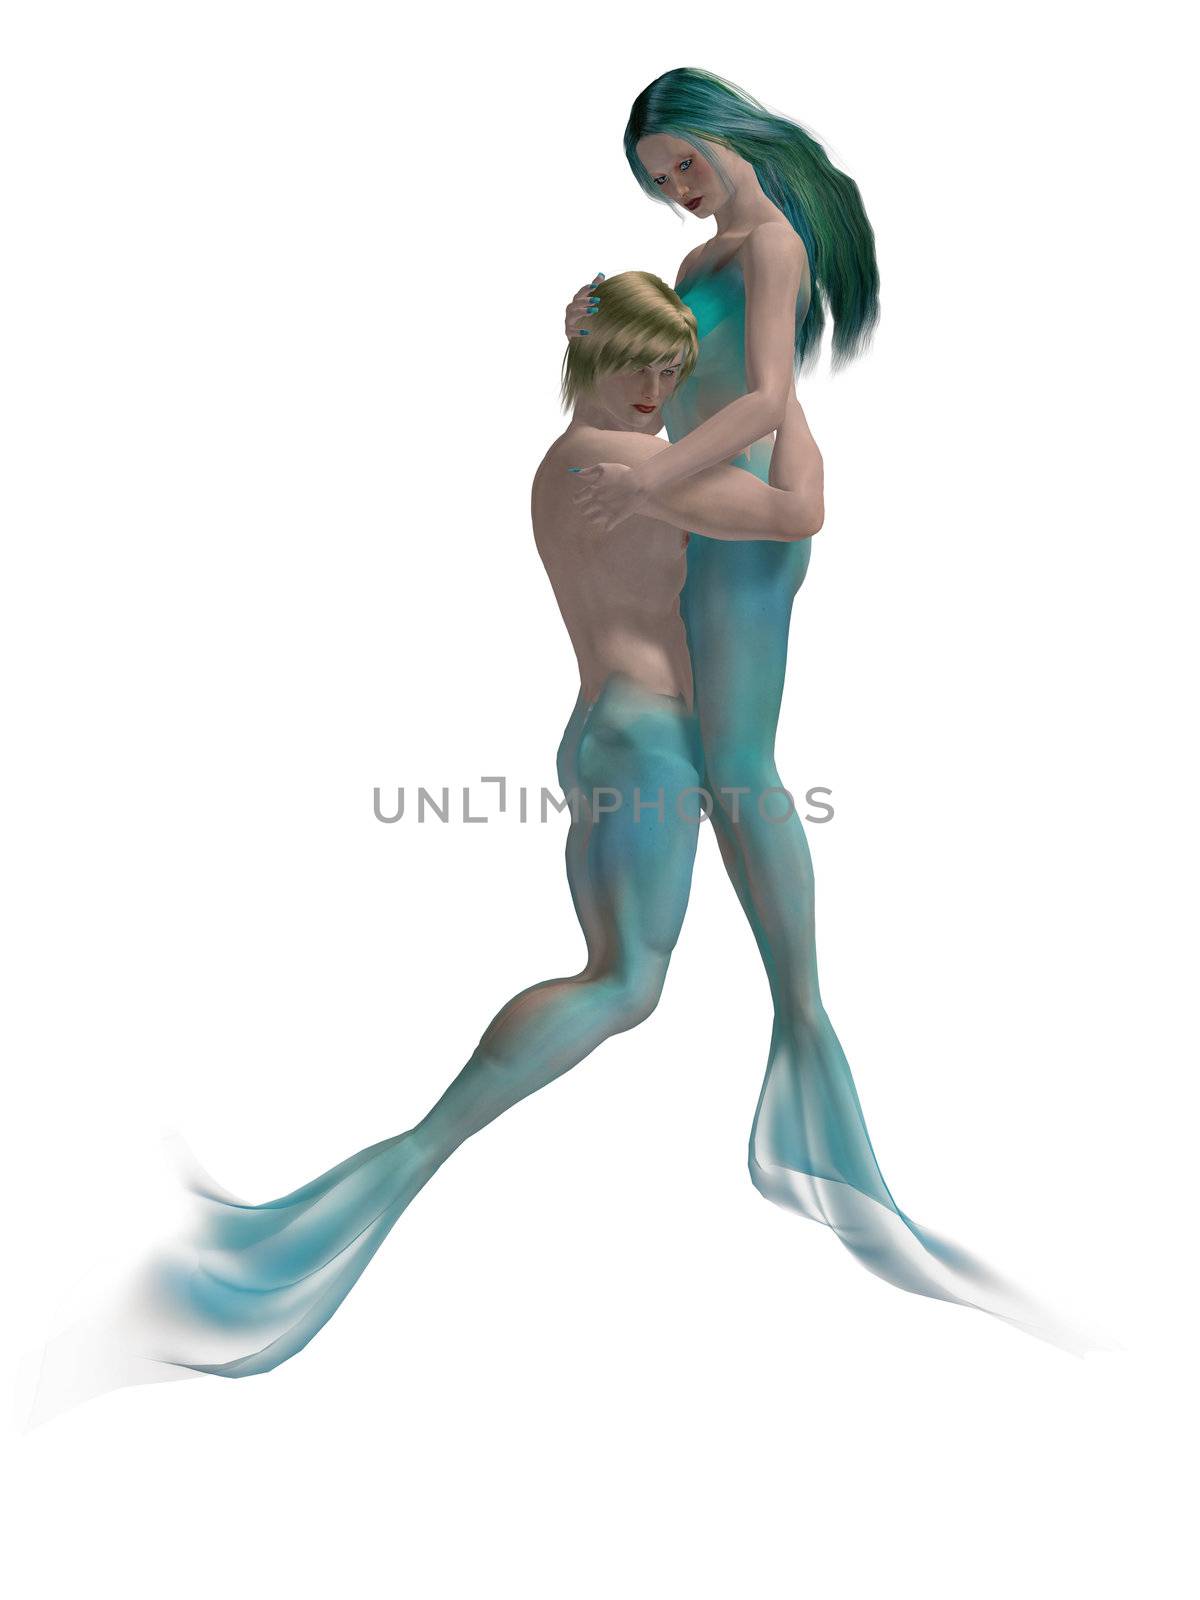 Mermaid Couple by kathygold